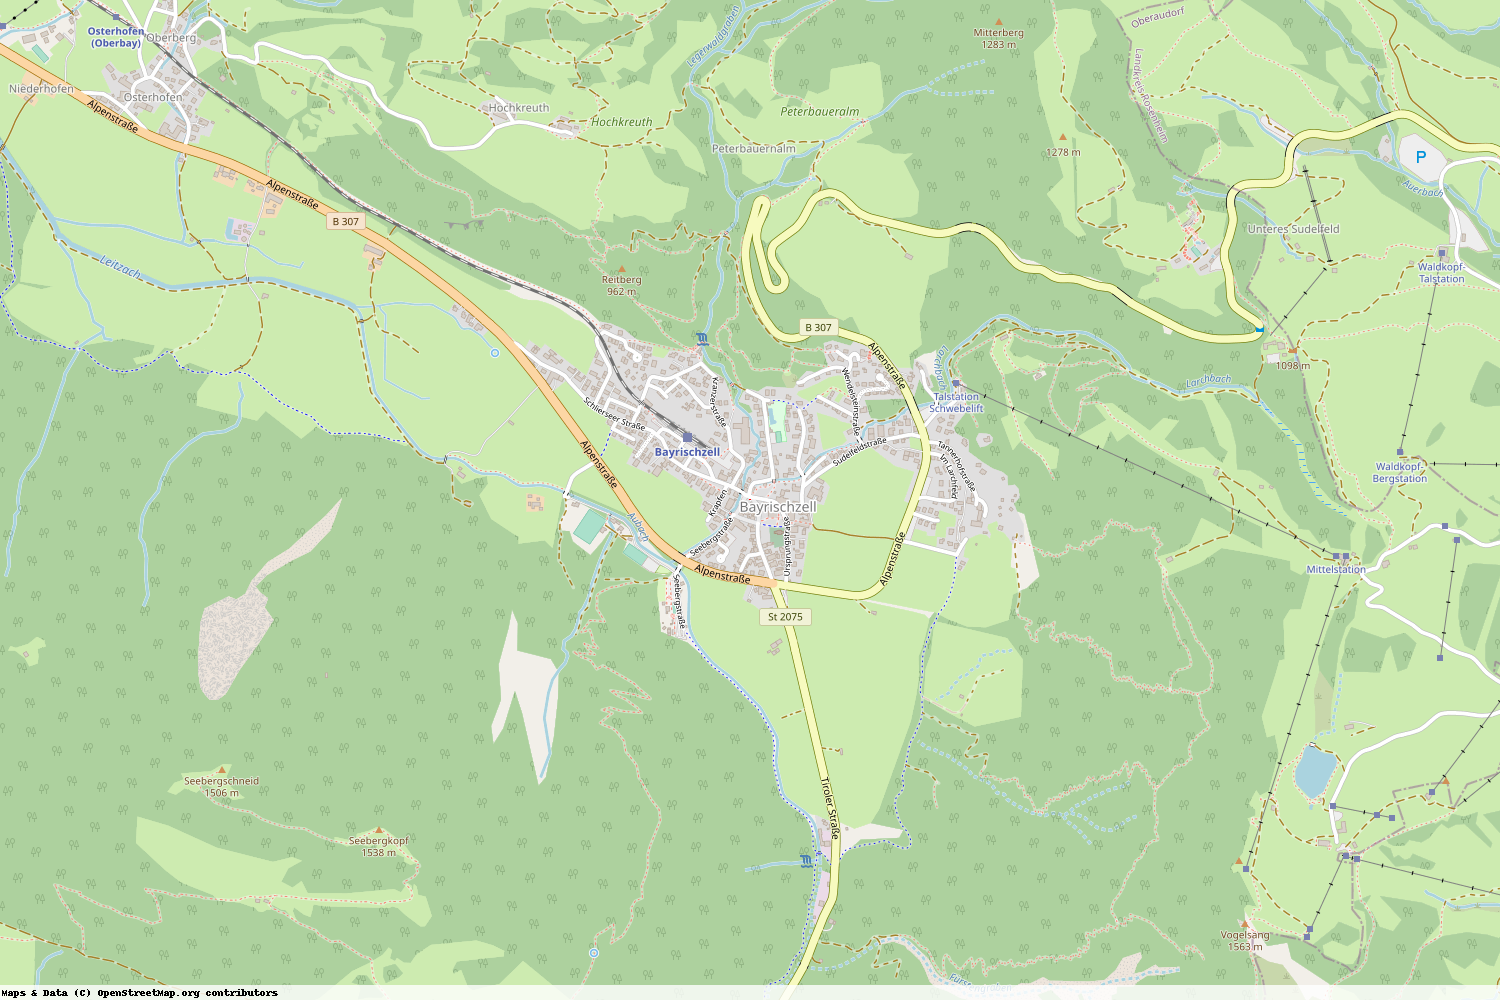 Ist gerade Stromausfall in Bayern - Miesbach - Bayrischzell?